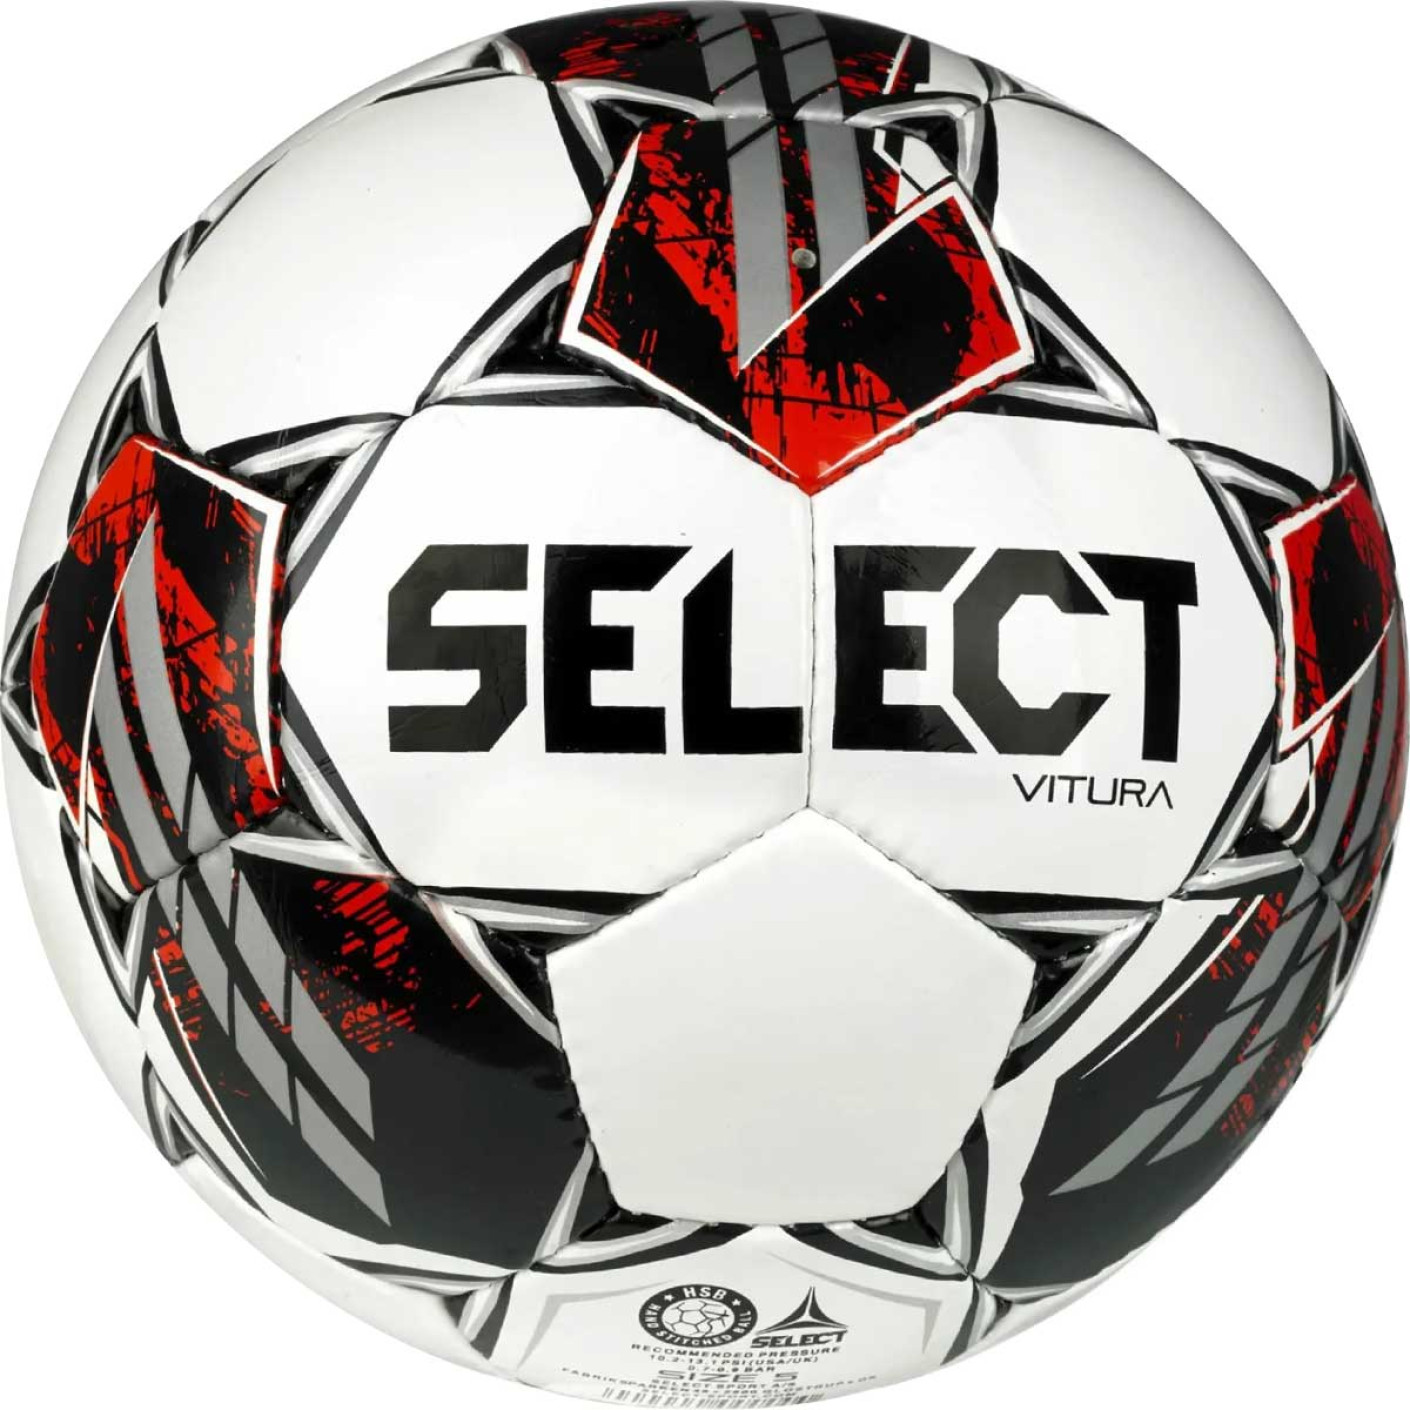 Select Vitura v23 Ballon de Football Taille 3 Blanc Noir Rouge